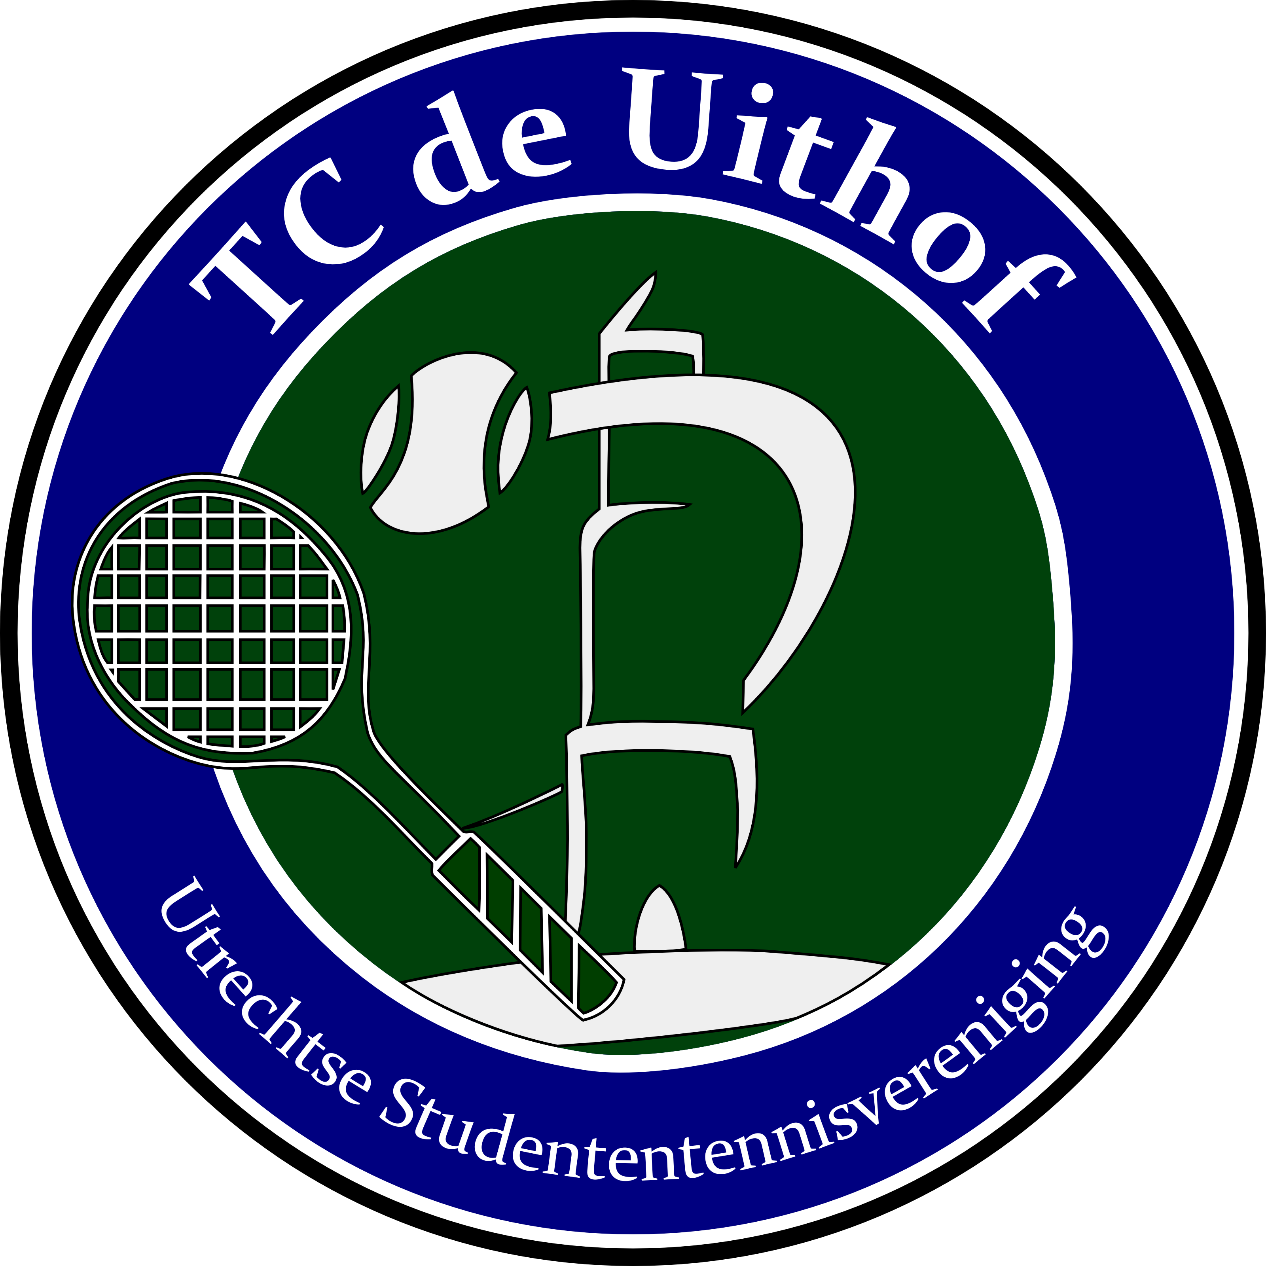 TC de Uithof logo